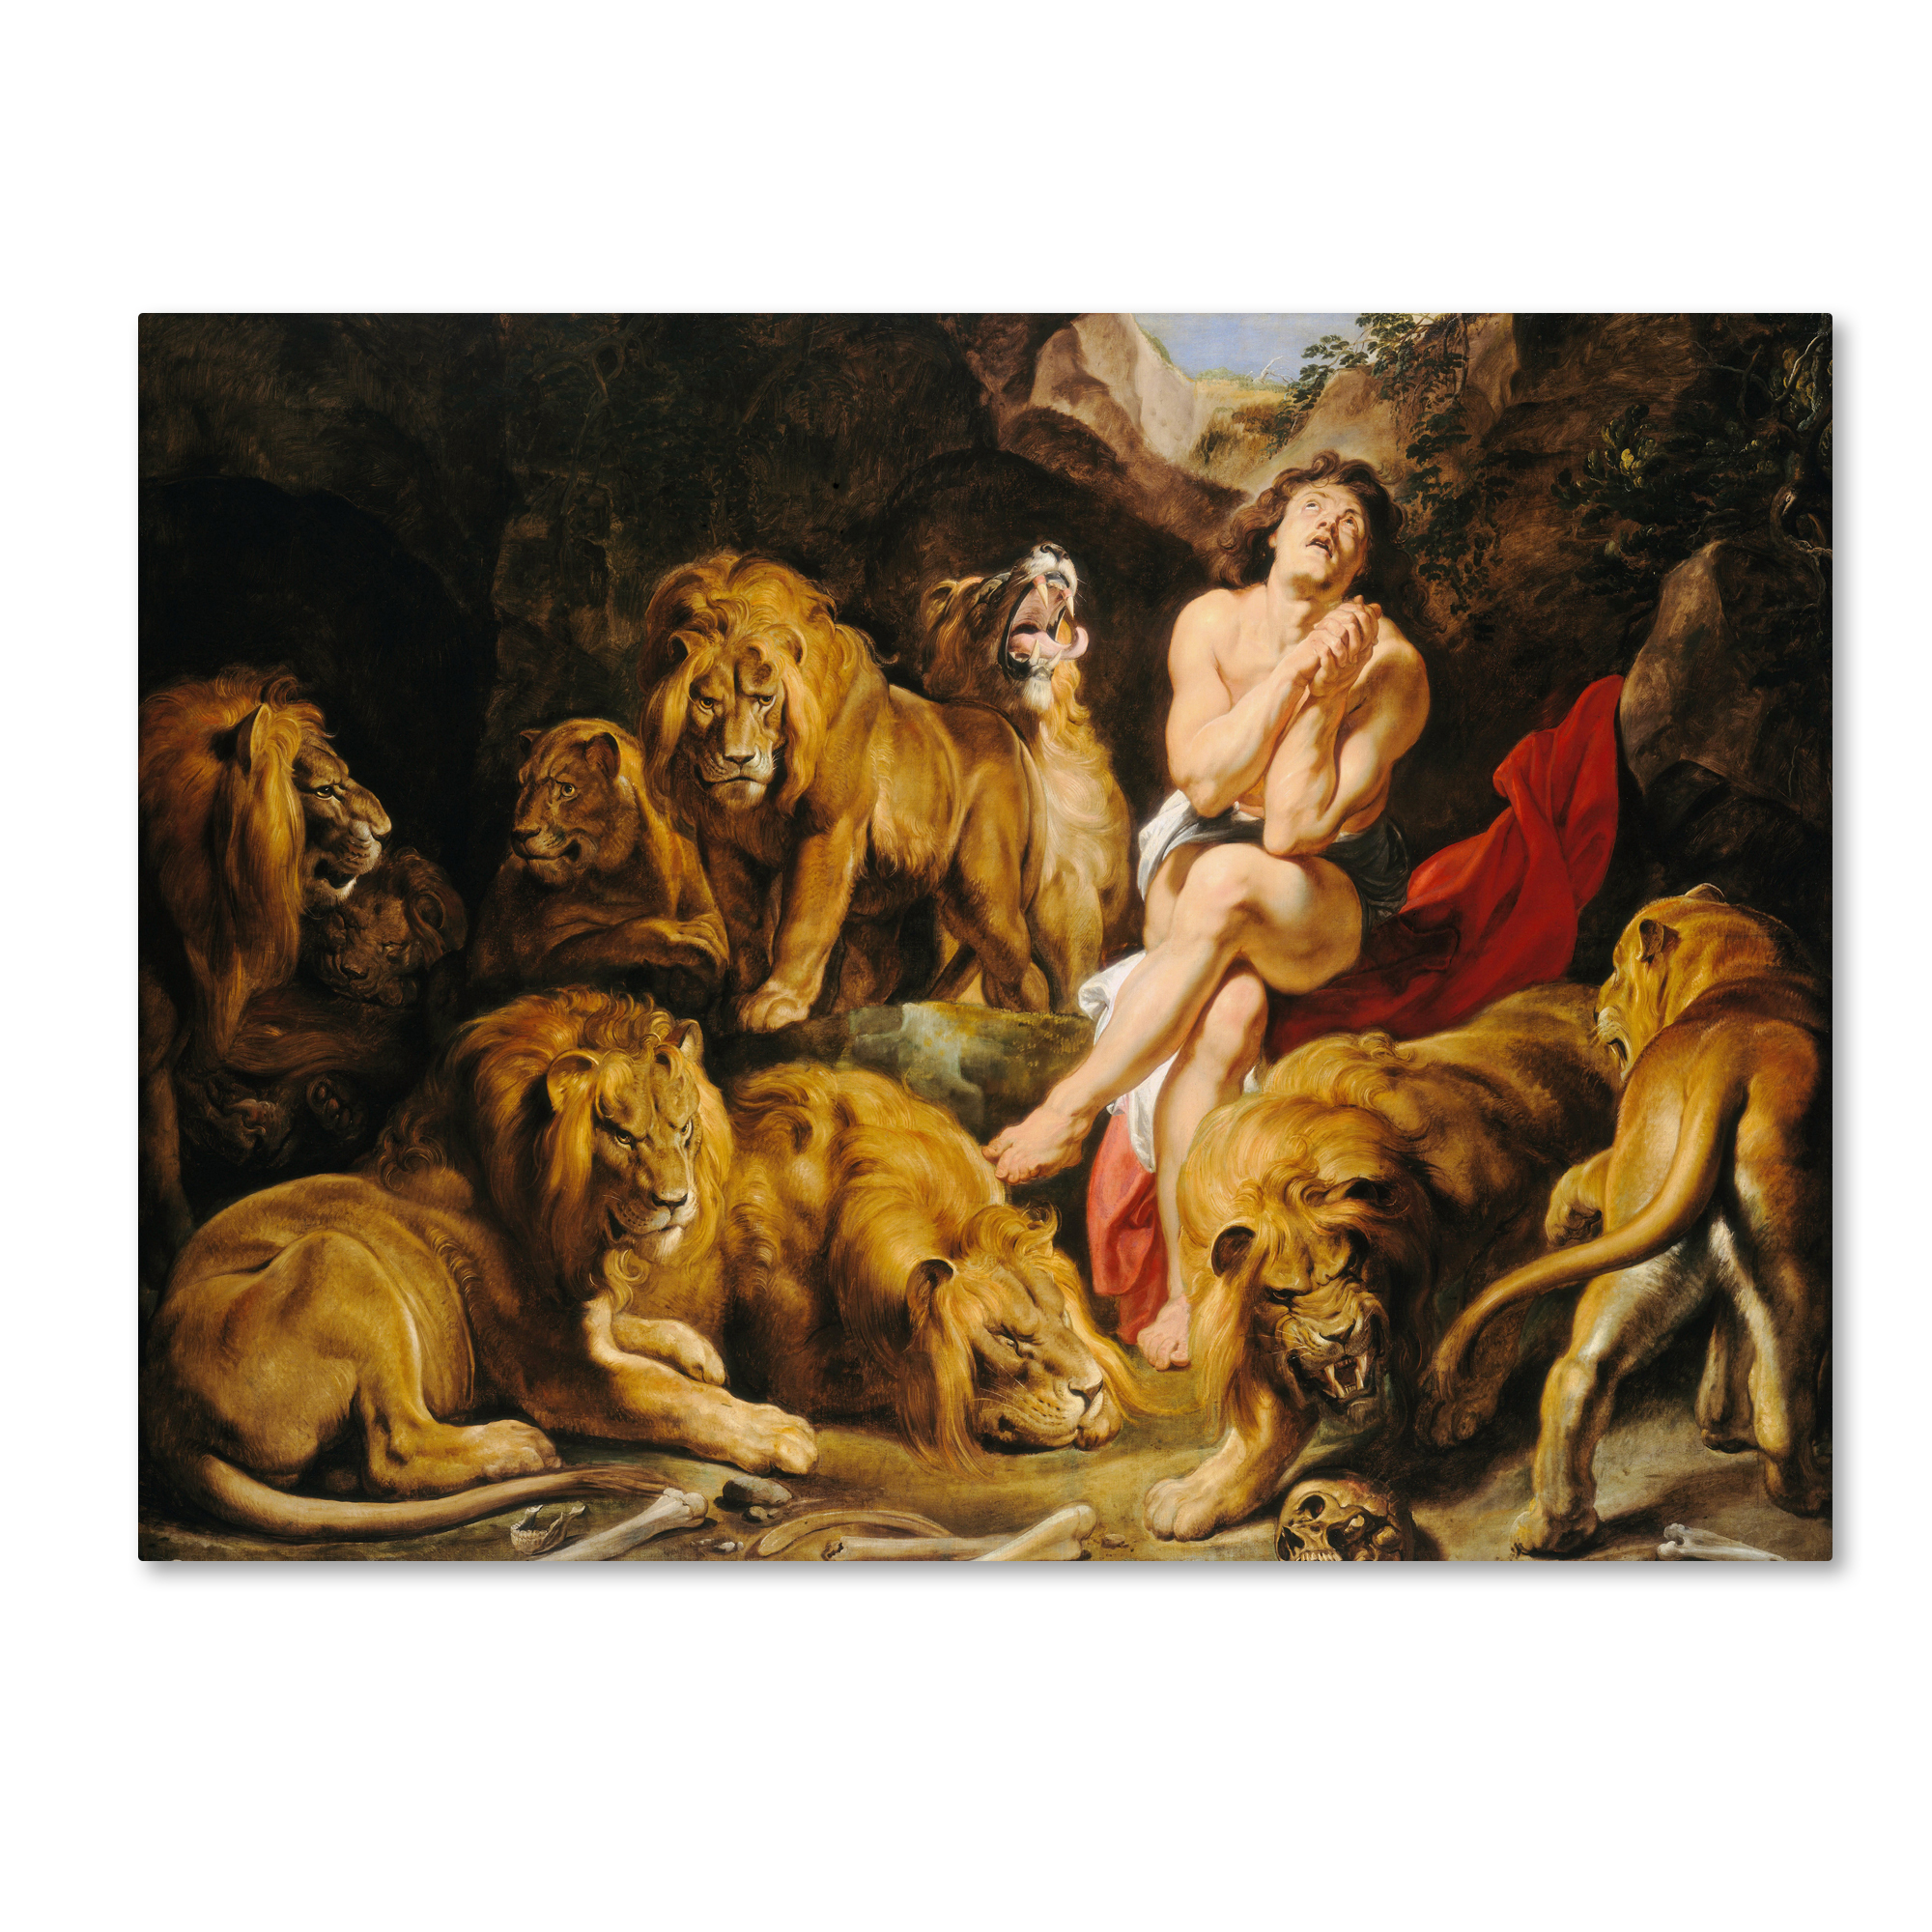 Trademark Fine Art 'Daniel In The Lions Den' Canvas Art by Peter Paul Rubens - image 1 of 3